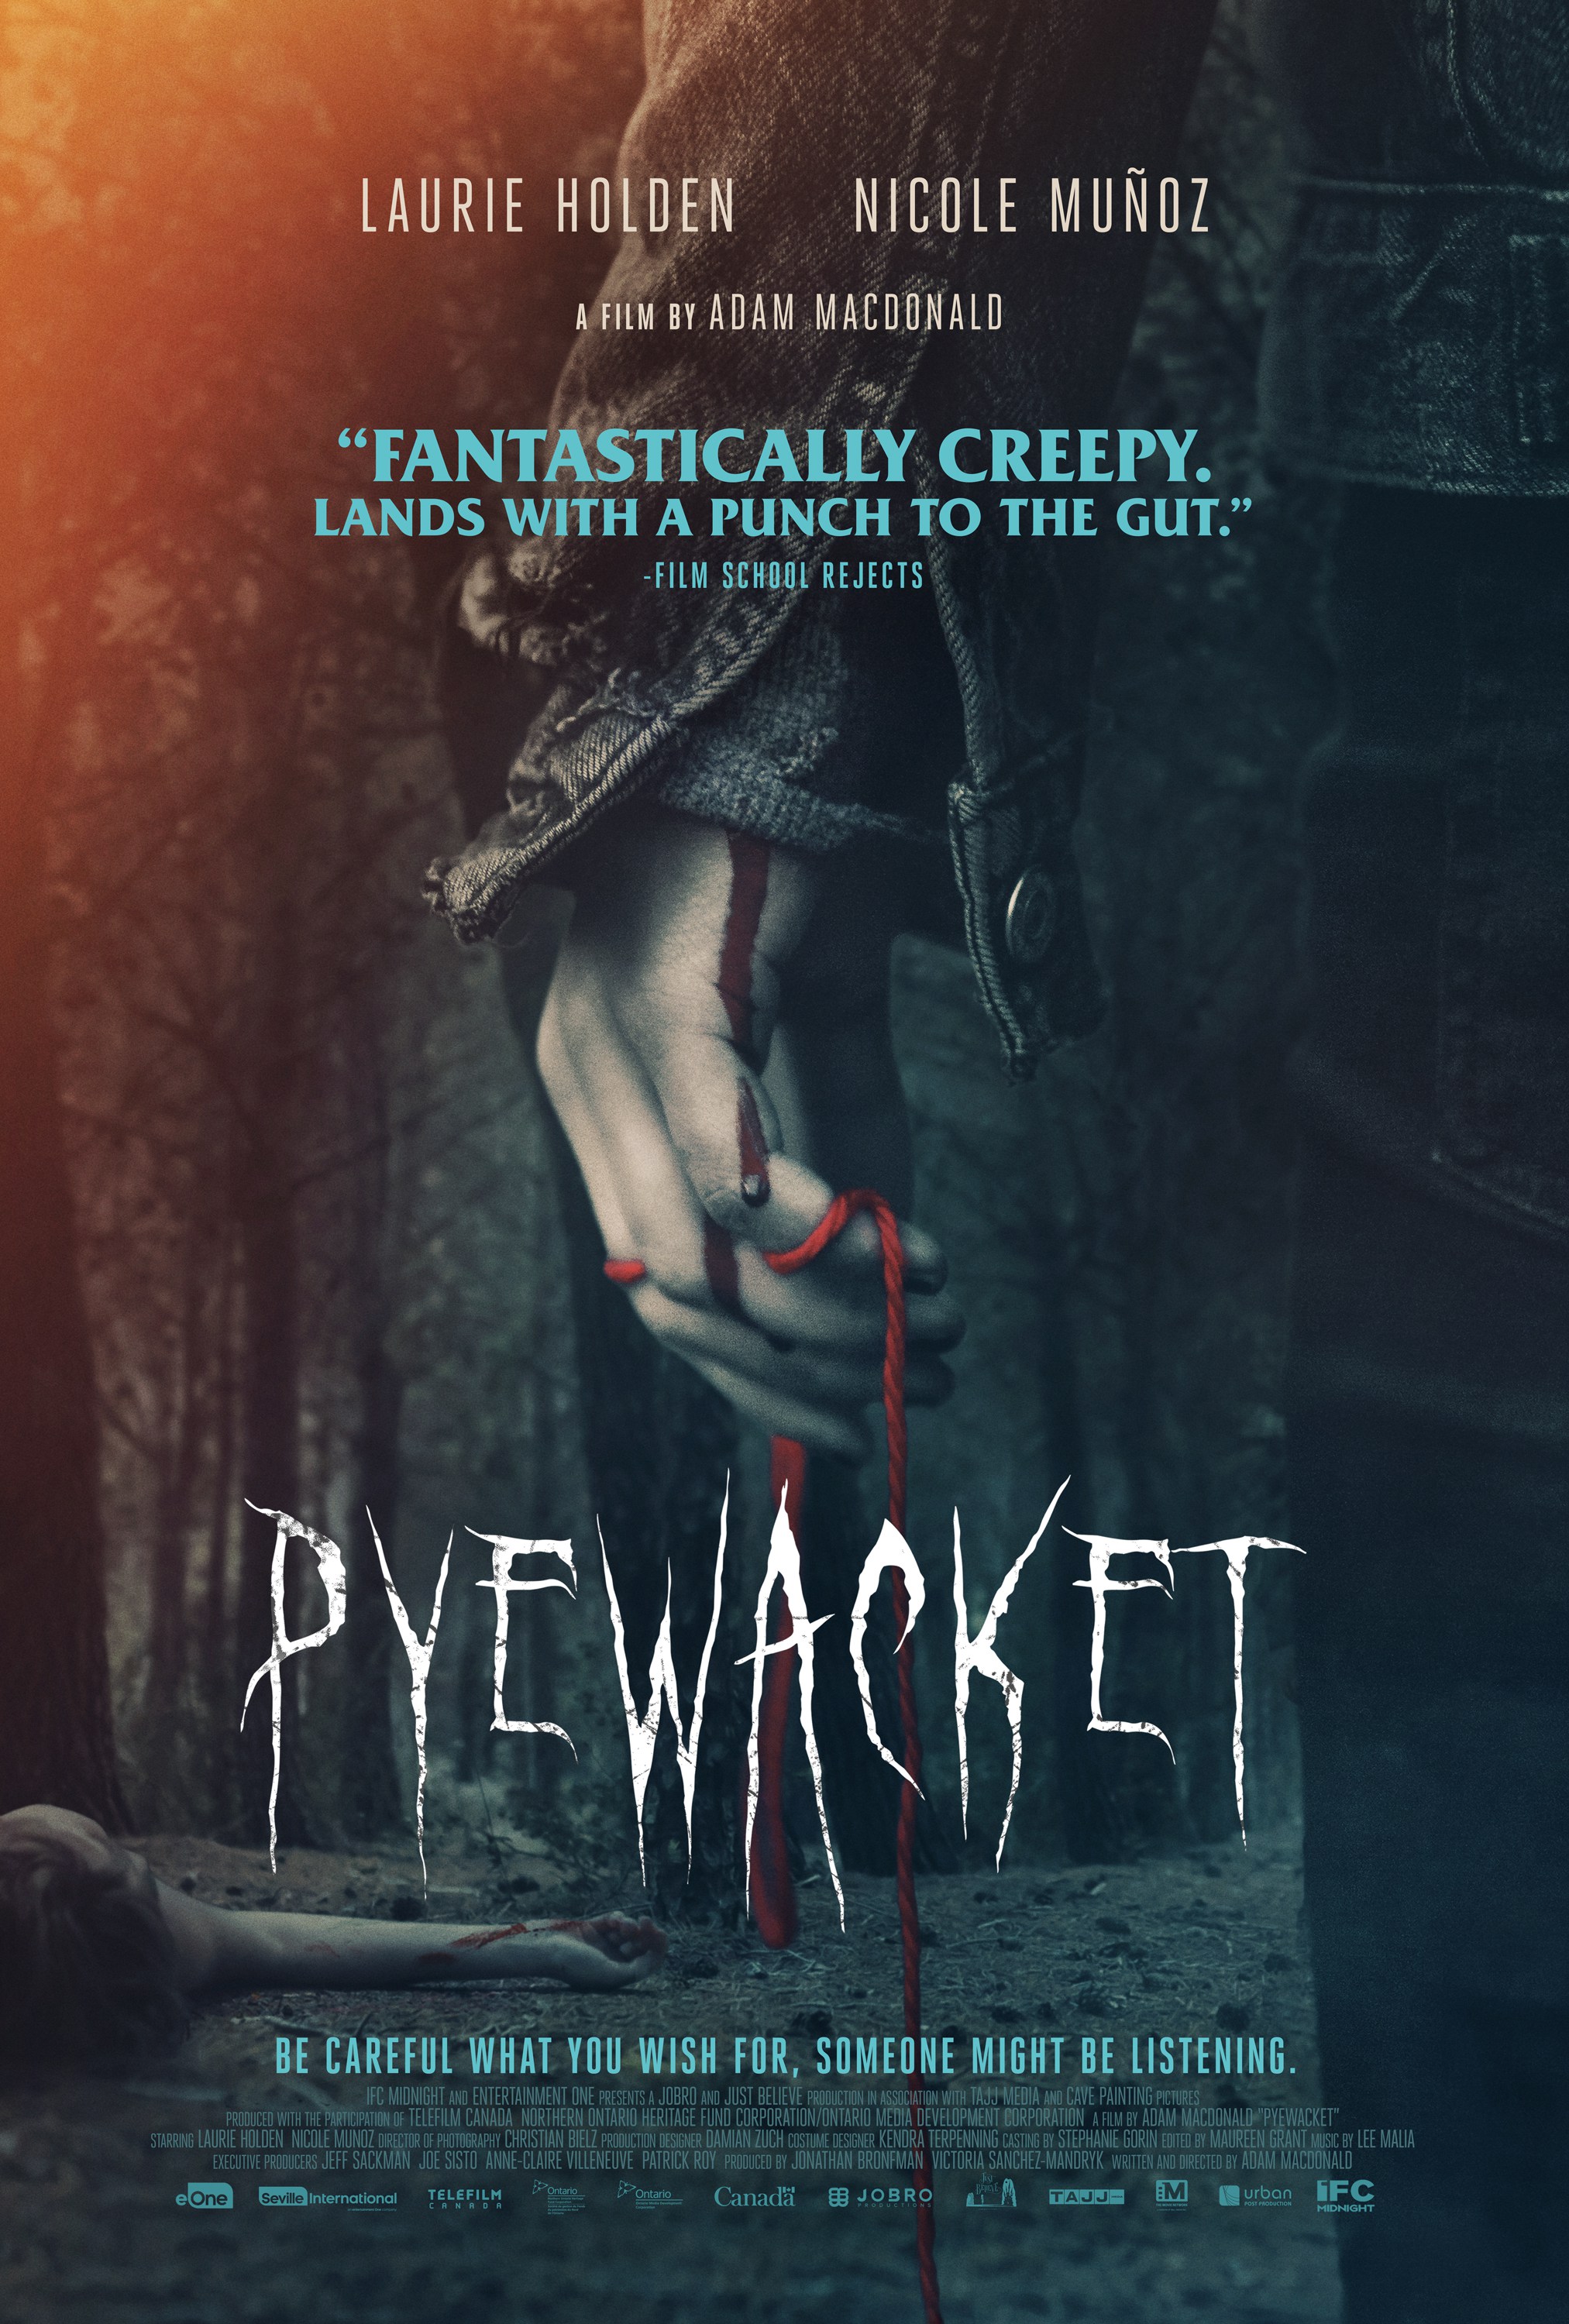 Nonton film Pyewacket layarkaca21 indoxx1 ganool online streaming terbaru